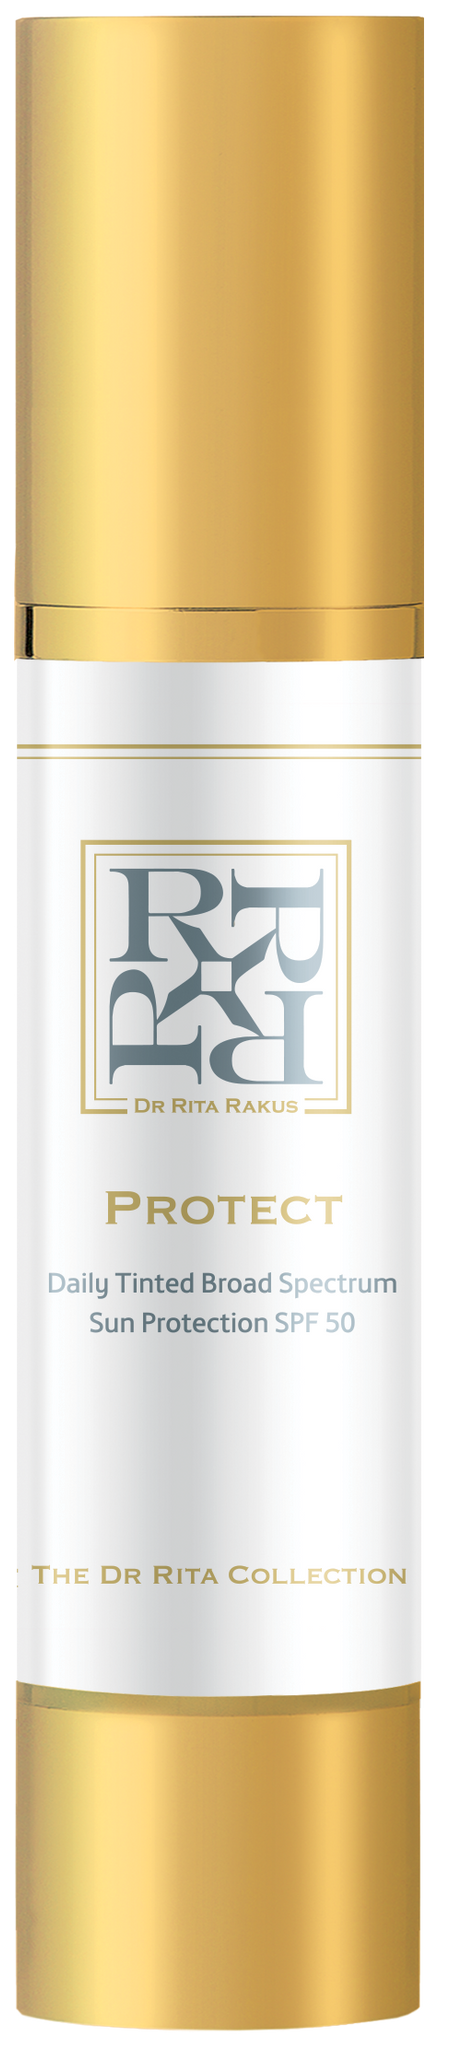 Protect SPF 50 - Dr Rita Collection